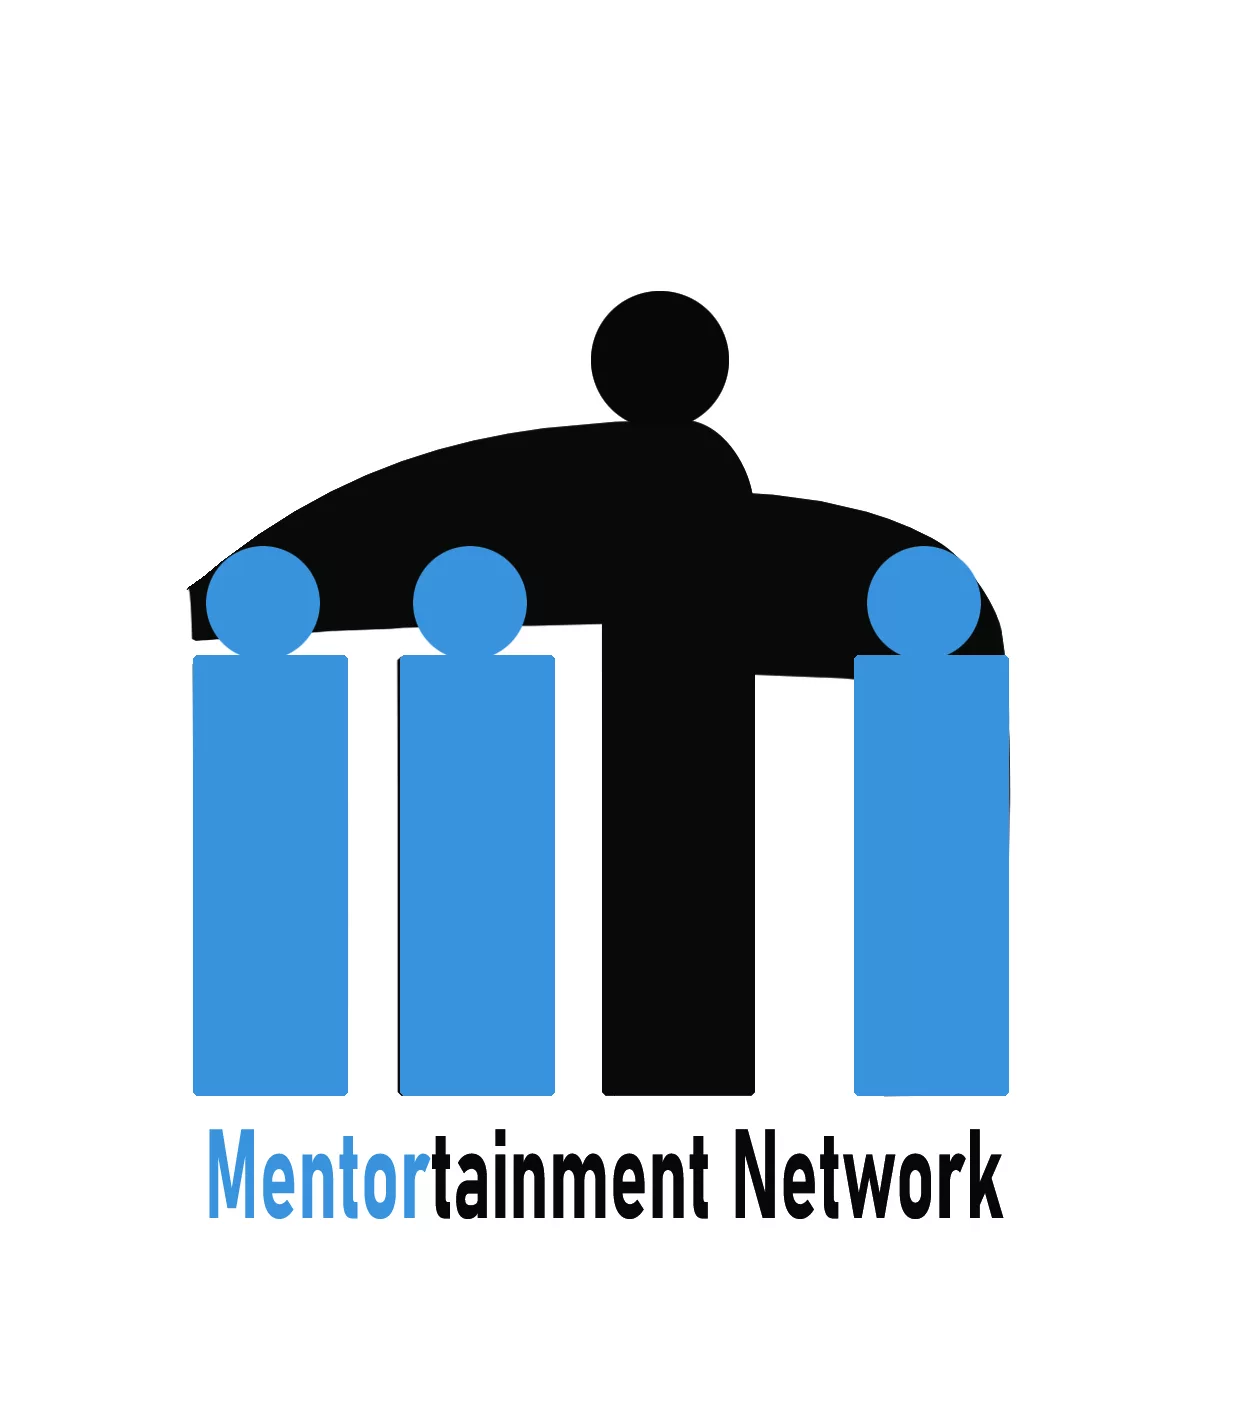 Mentortainment Network Official